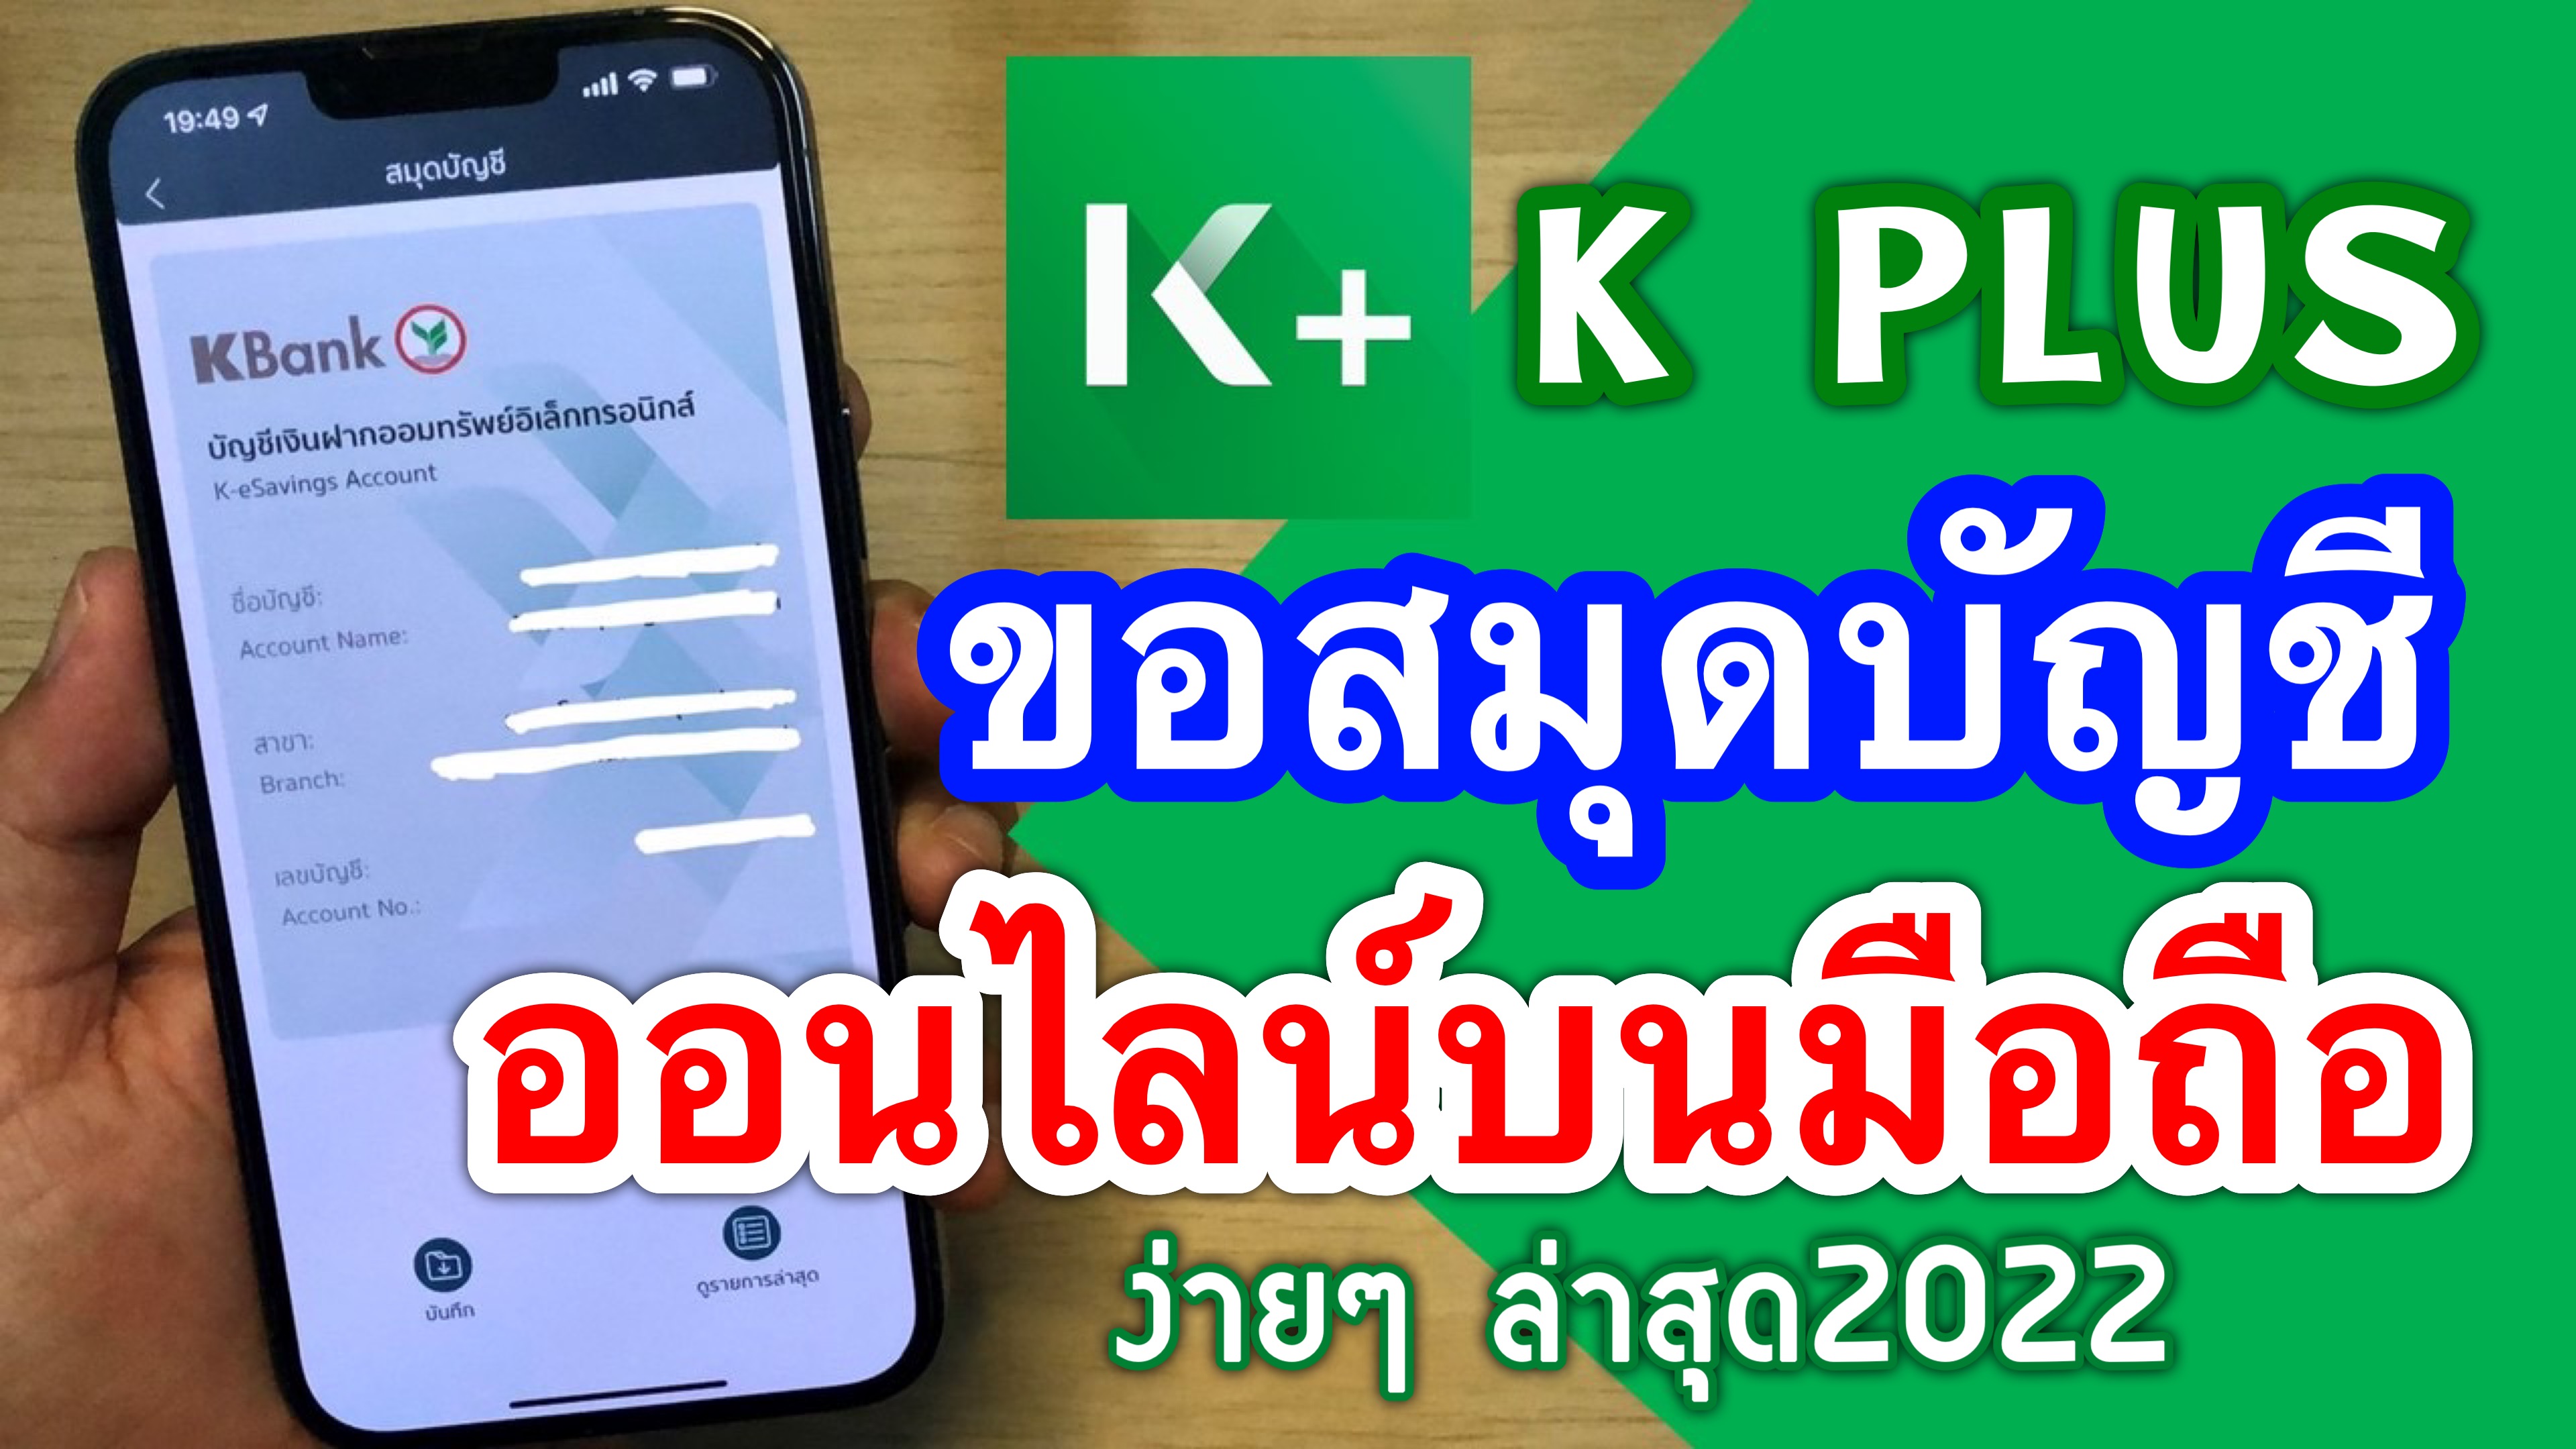 ▶️คลิป : วิธีขอสมุดบัญชีออนไลน์ แอป K Plus ของธนาคารกสิกรไทย บนมือถือง่ายๆ  ล่าสุด 2022 | Trueid Creator